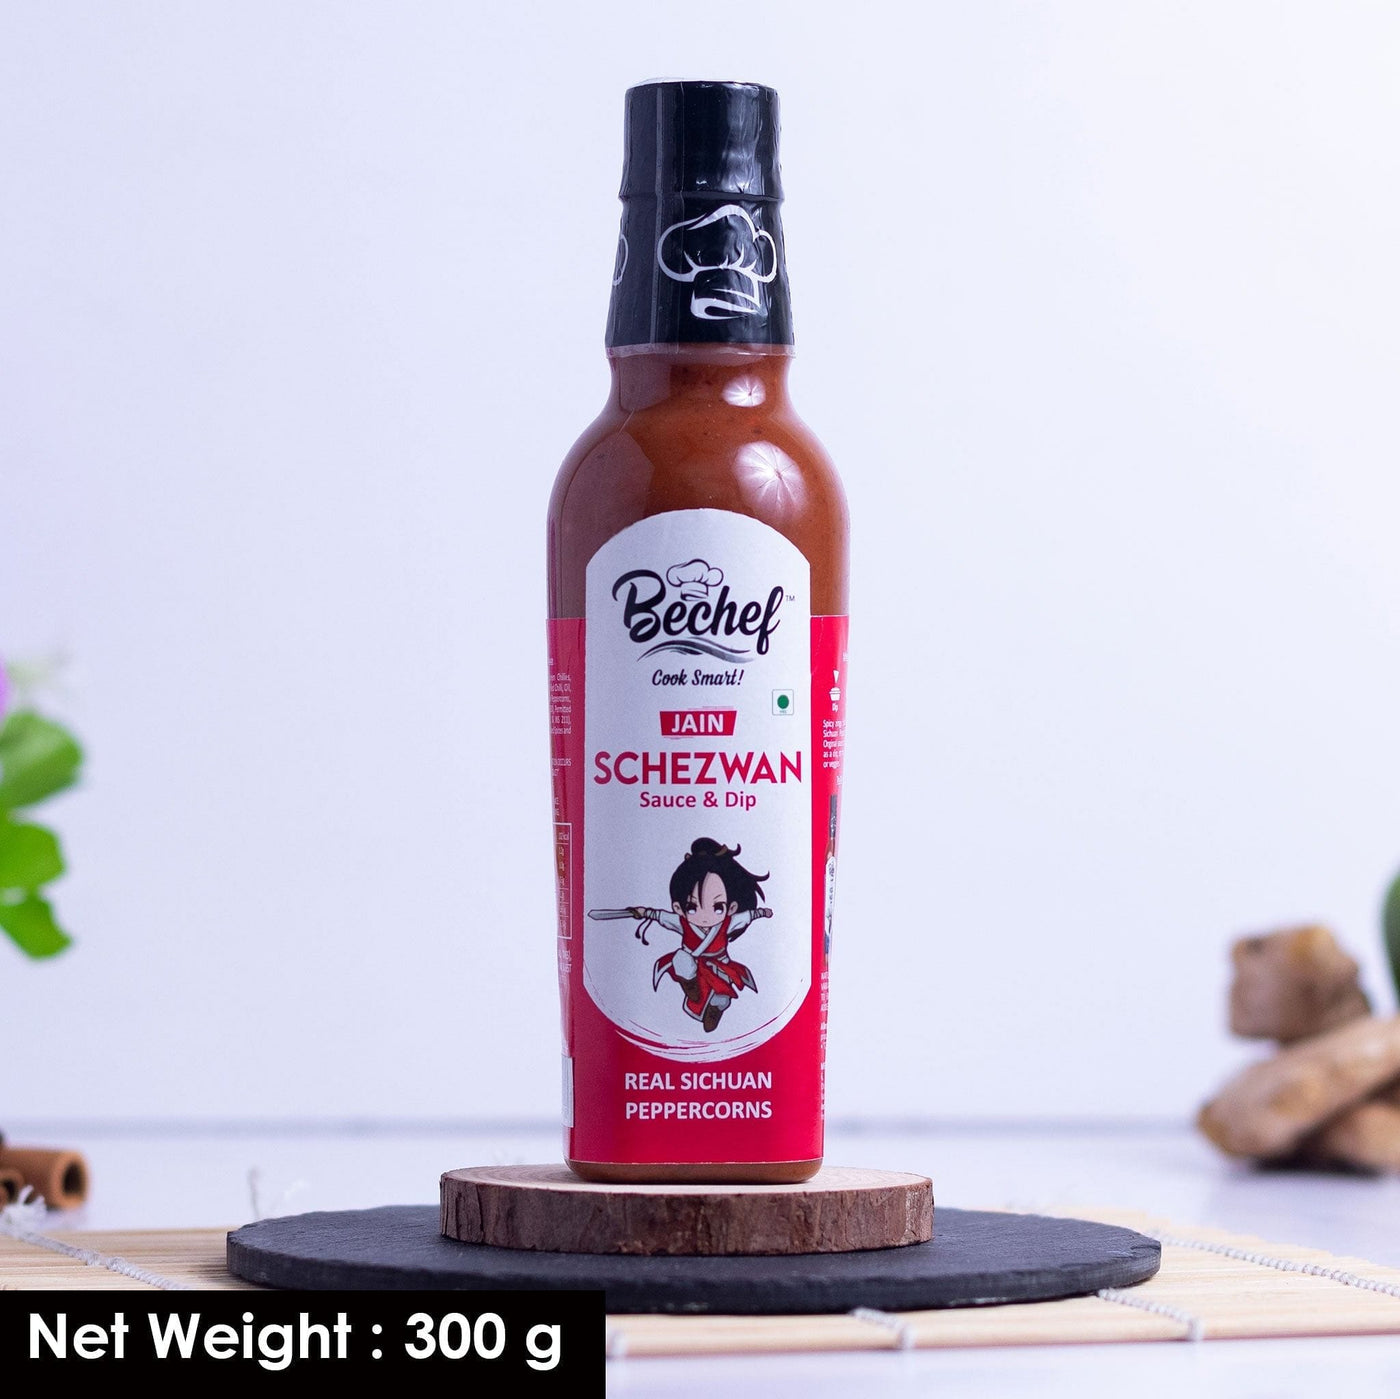 Jain Schezwan Sauce - Bechef - Gourmet Pantry Essentials